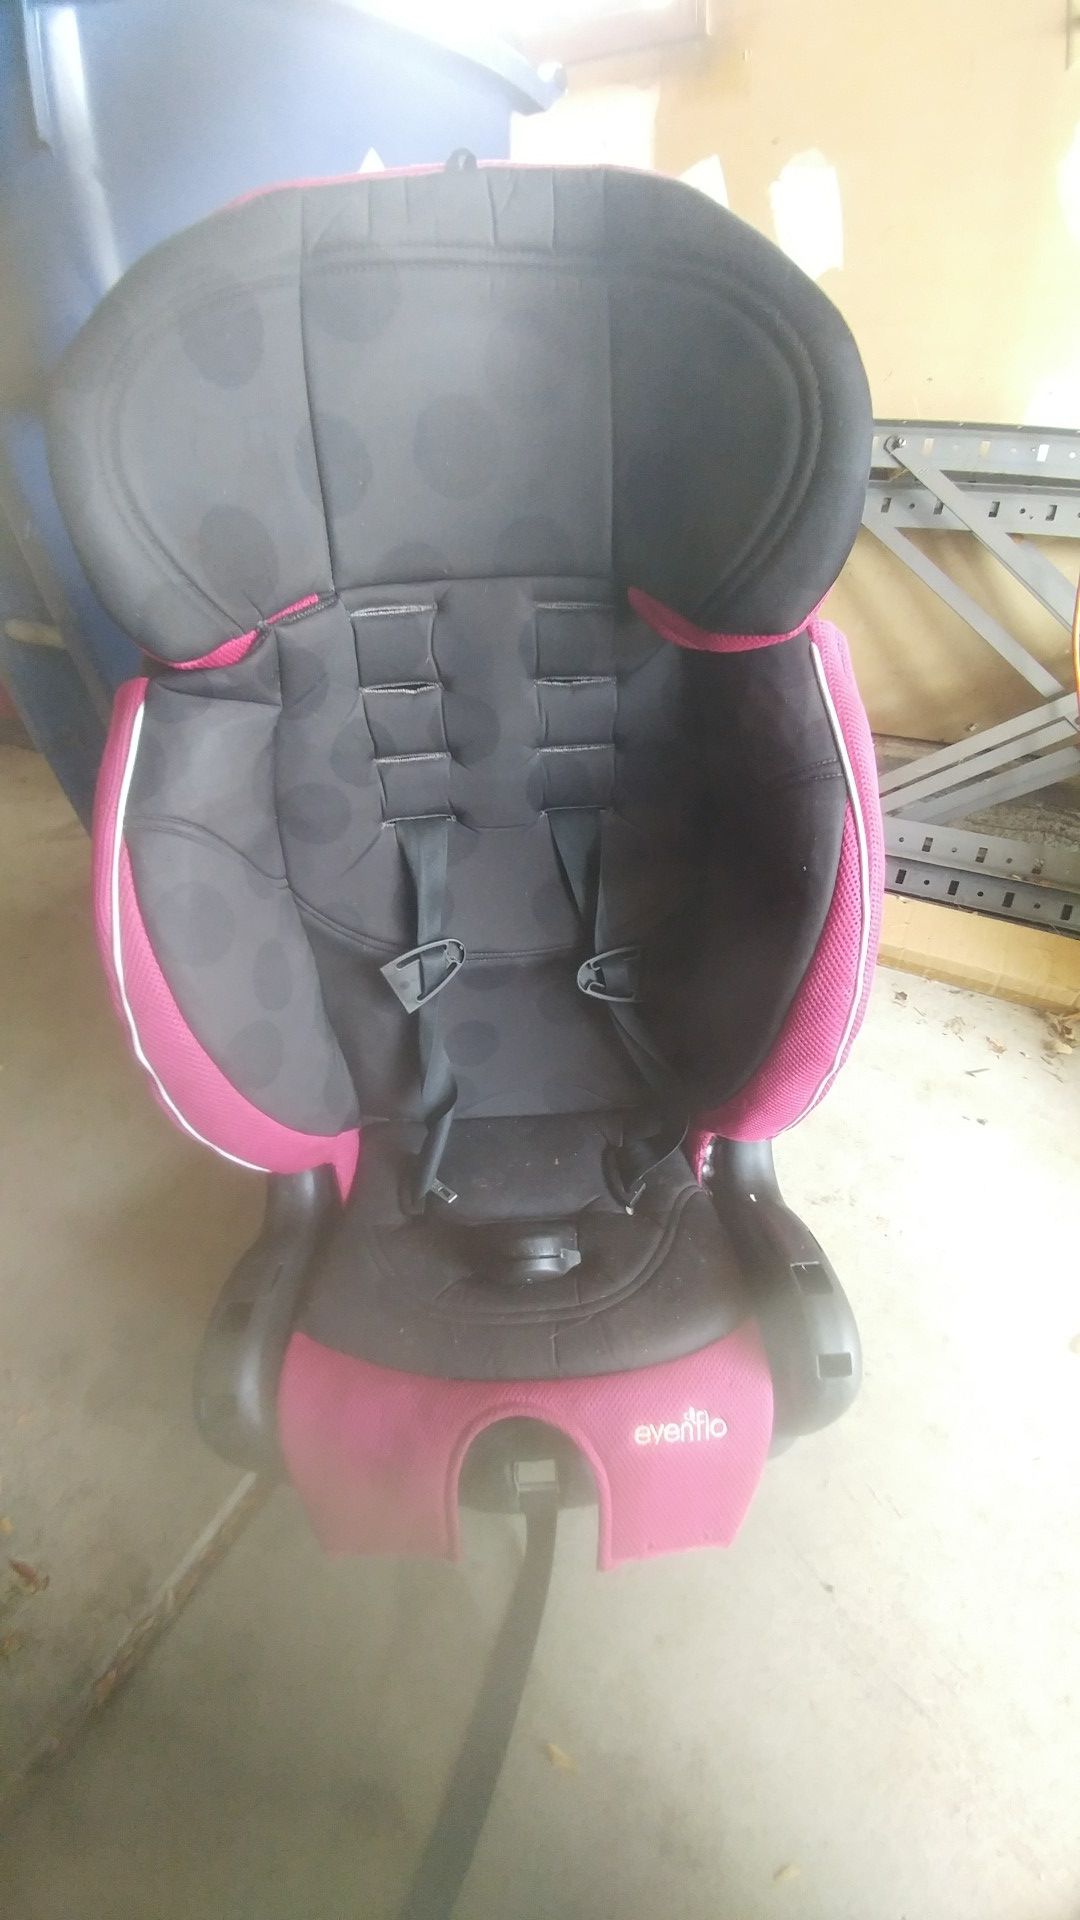 Evenflo Child's car seat